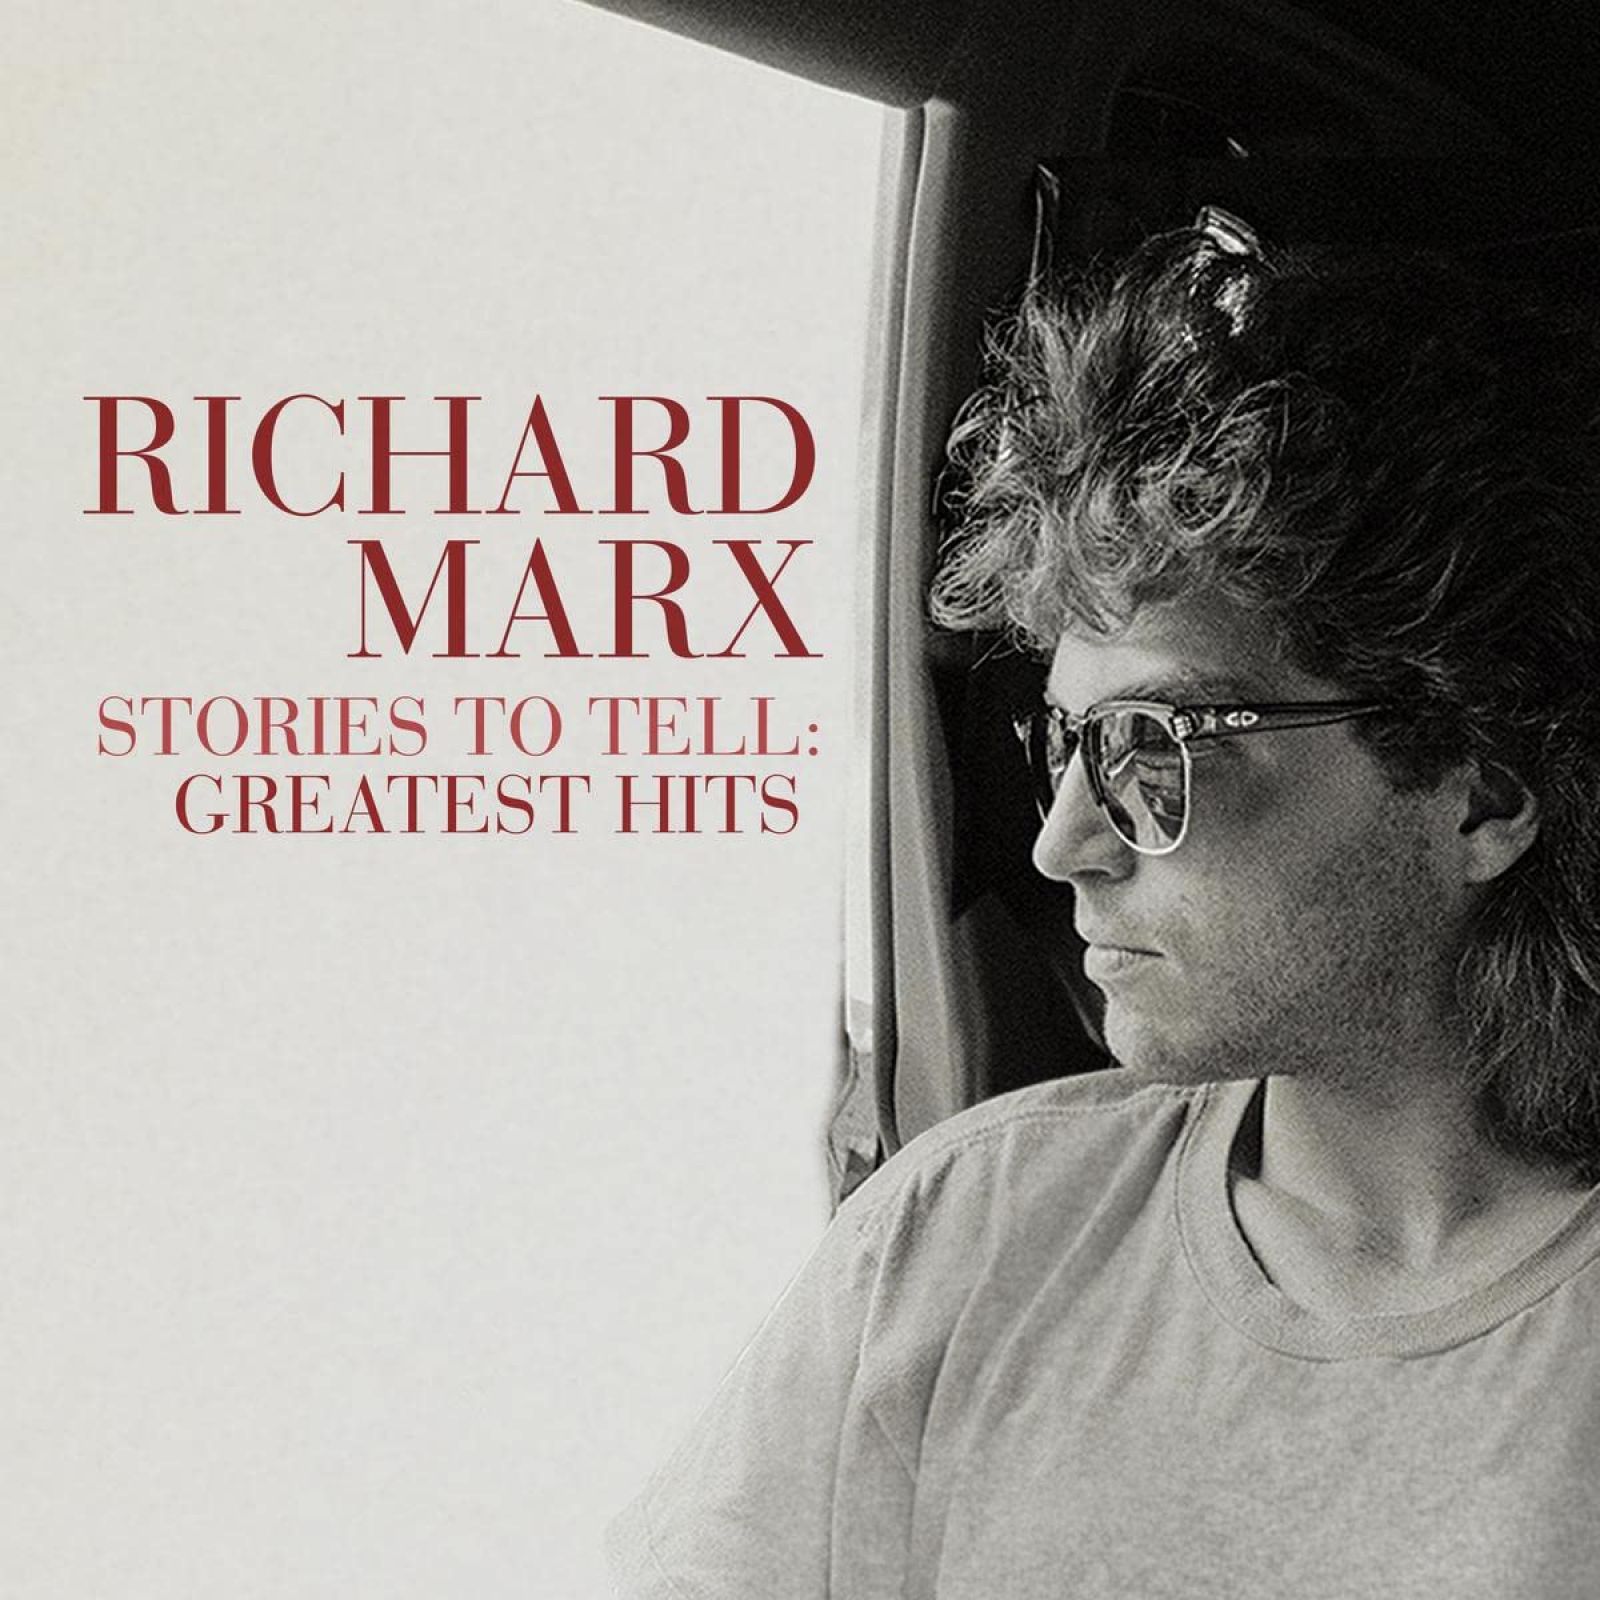 виниловая пластинка marx richard stories to tell greatest hits 4050538715392 Виниловая пластинка Marx, Richard, Stories To Tell: Greatest Hits (4050538715392)